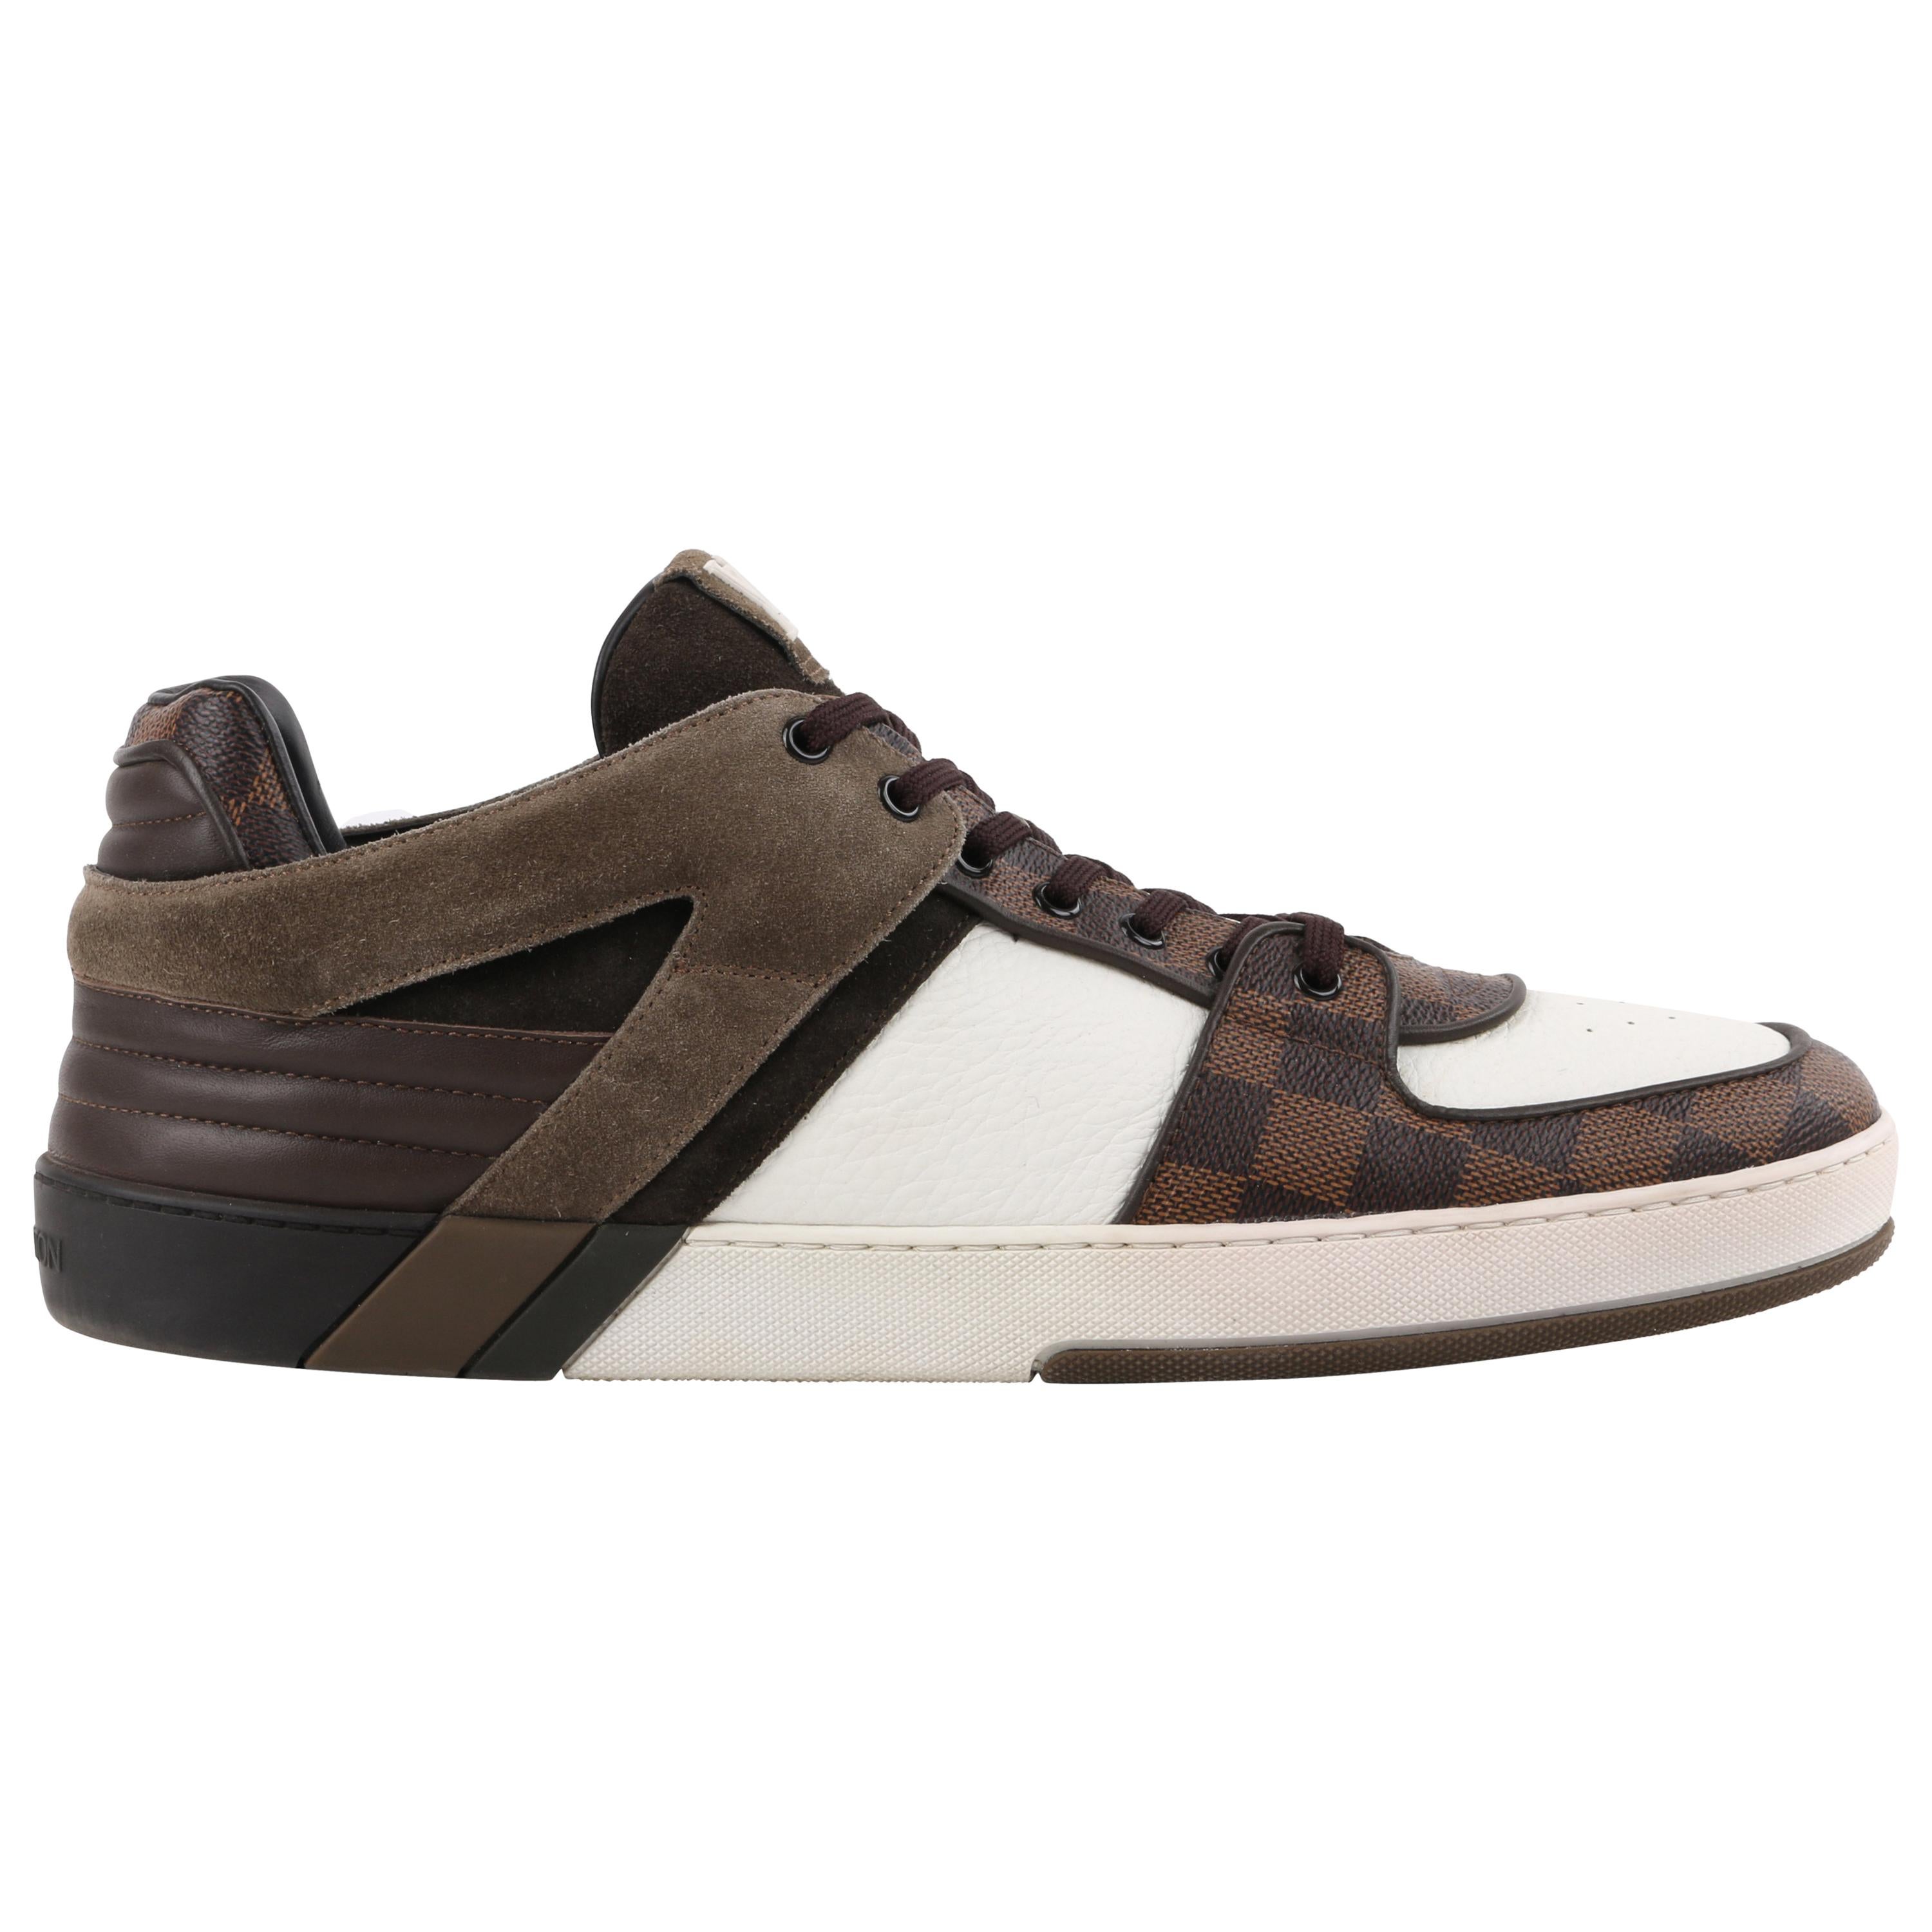 LOUIS VUITTON S/S 2012 "Ace" Brown Damier Canvas & Leather Low Top Sneaker